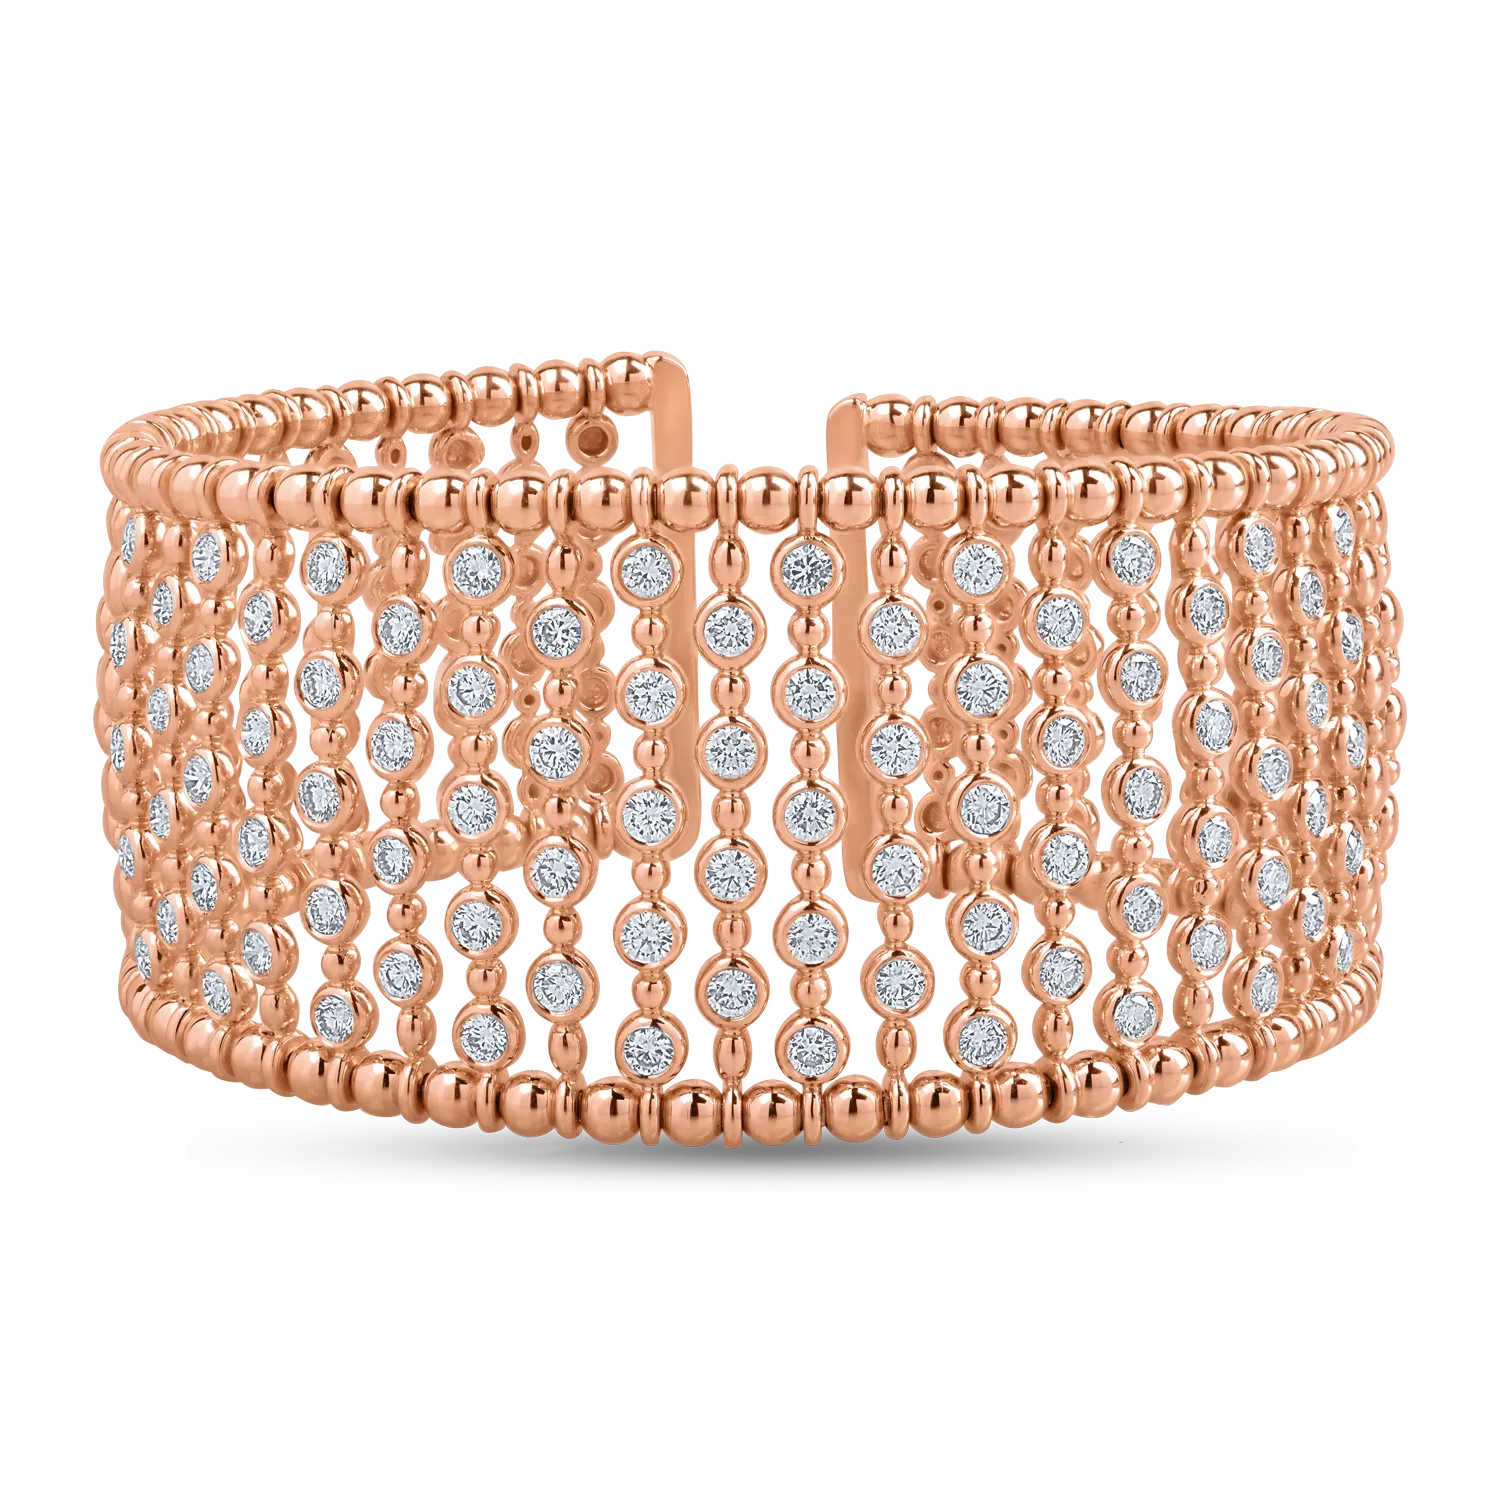 Rose gold bracelet with 4.02ct diamonds